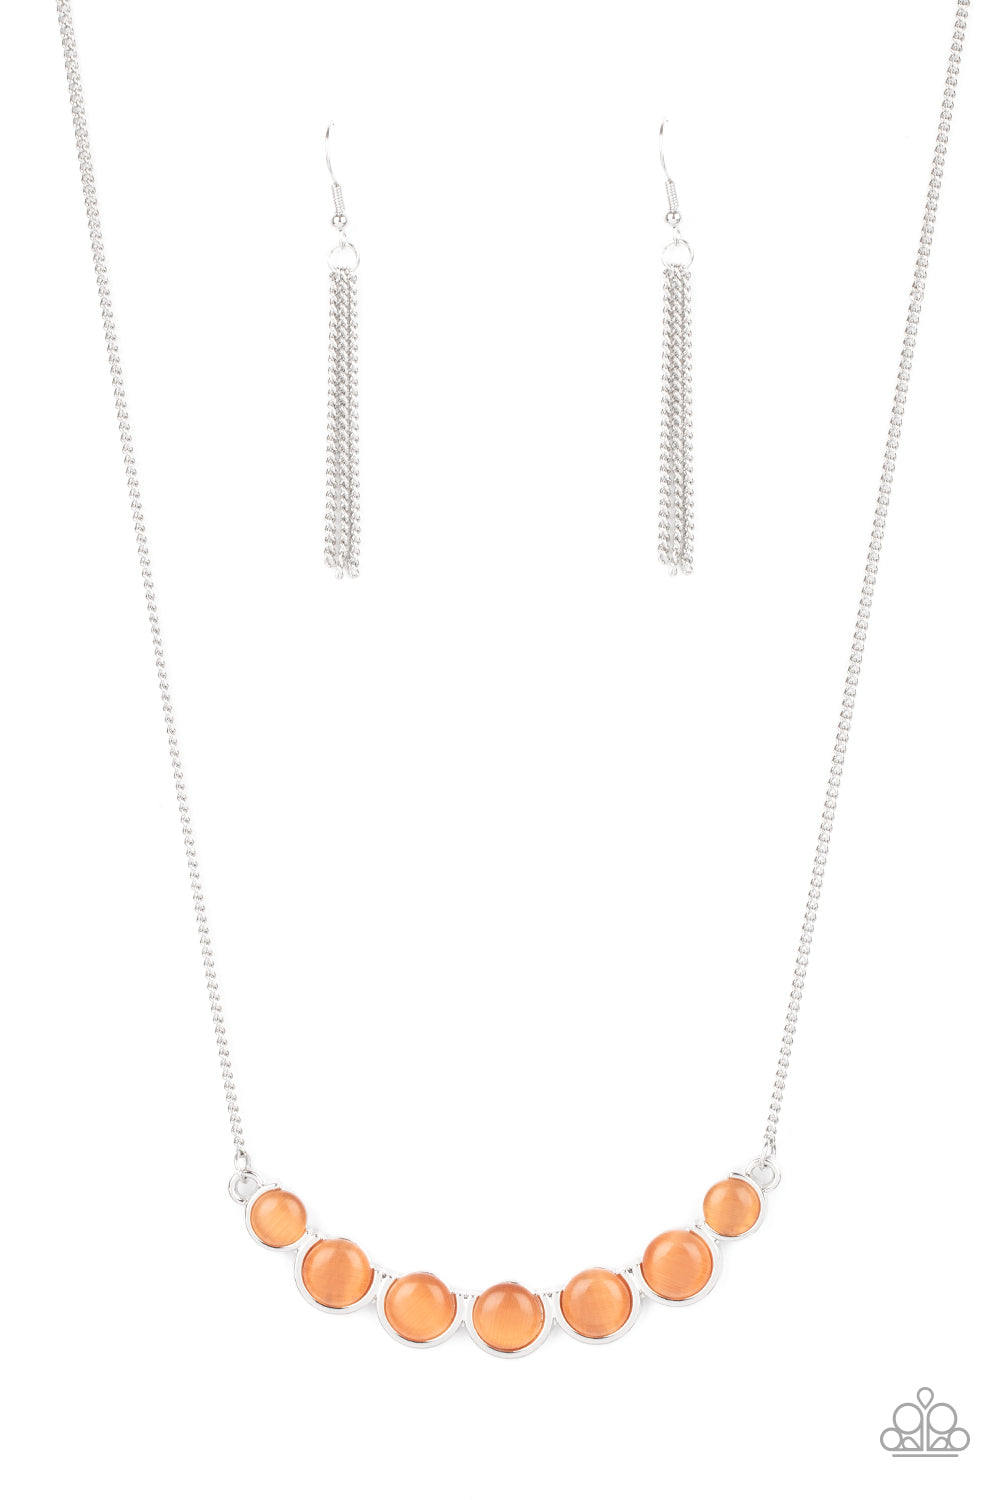 Serenely Scalloped Orange Necklace - Paparazzi Accessories